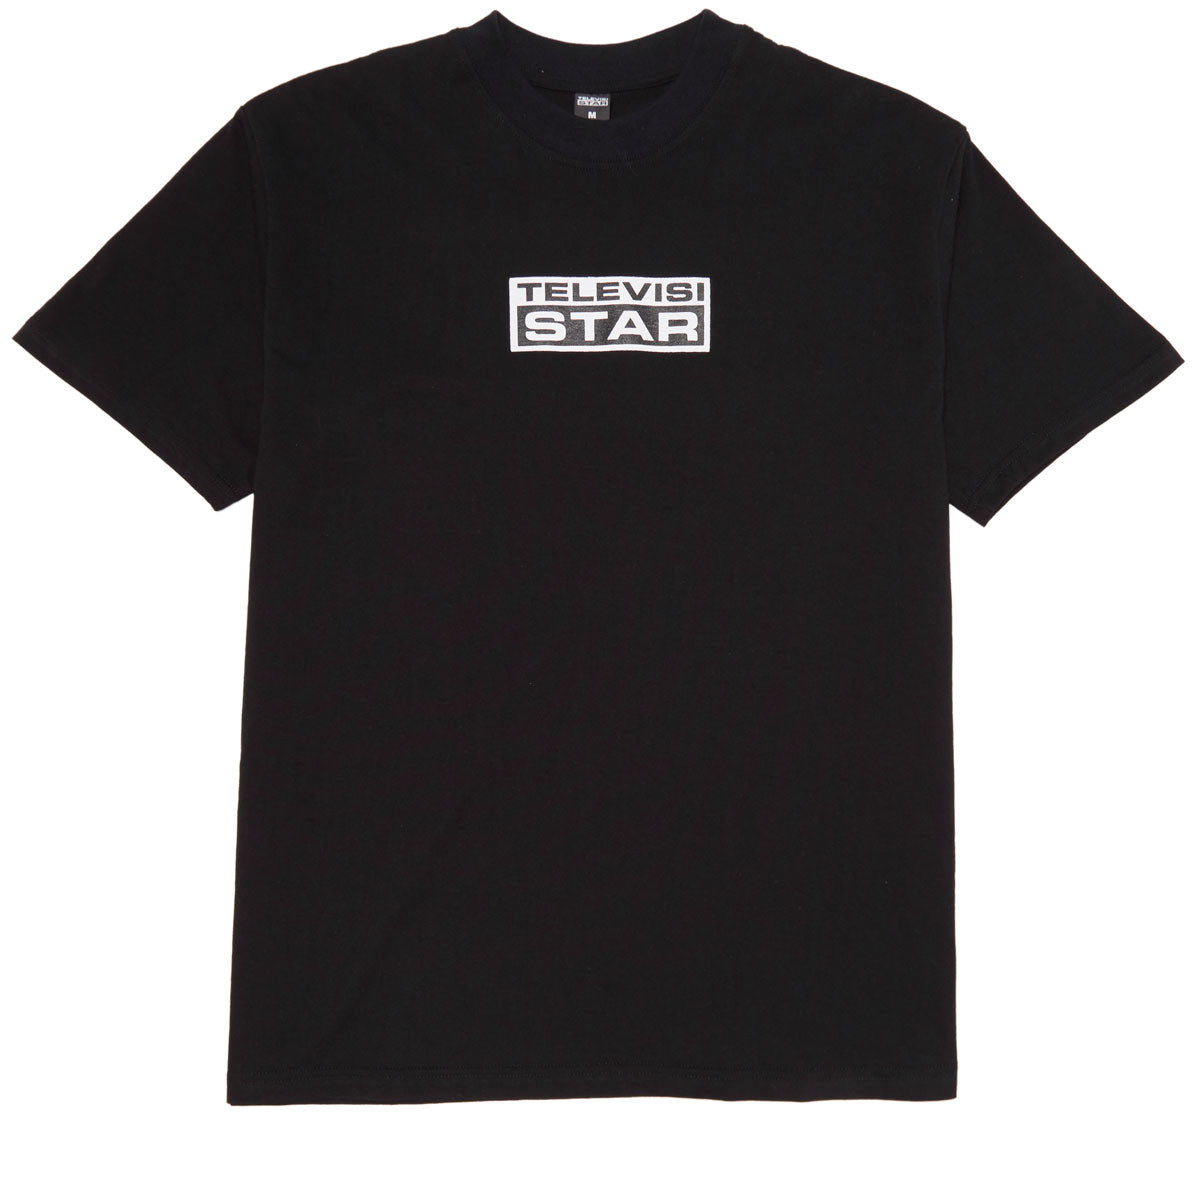 Televisi Star Tvs Box T-Shirt - Black image 1